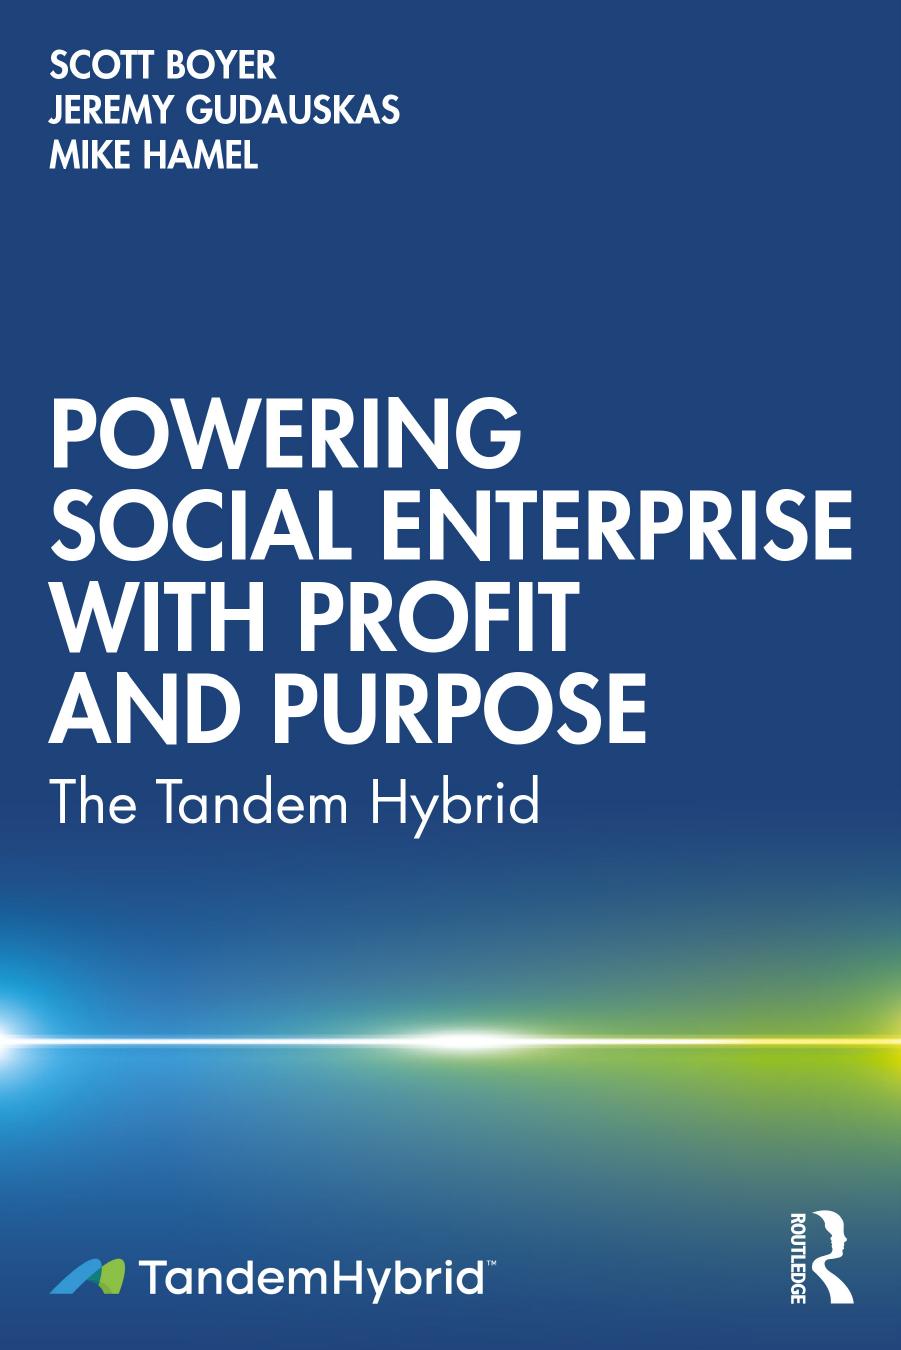 Powering Social Enterprise with Profit and Purpose: The Tandem Hybrid by Scott Boyer Jeremy Gudauskas Mike Hamel